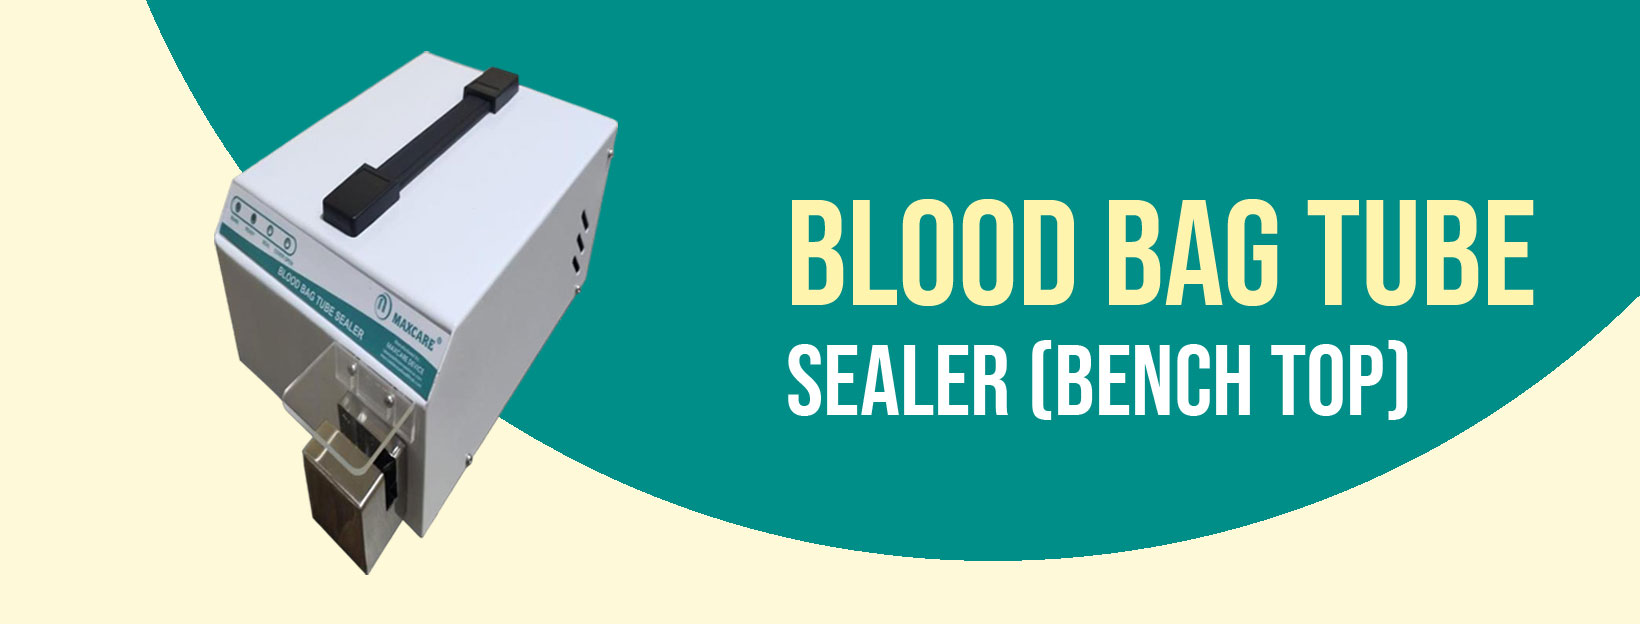 BLOOD BAG TUBE SEALER BENCH TOP